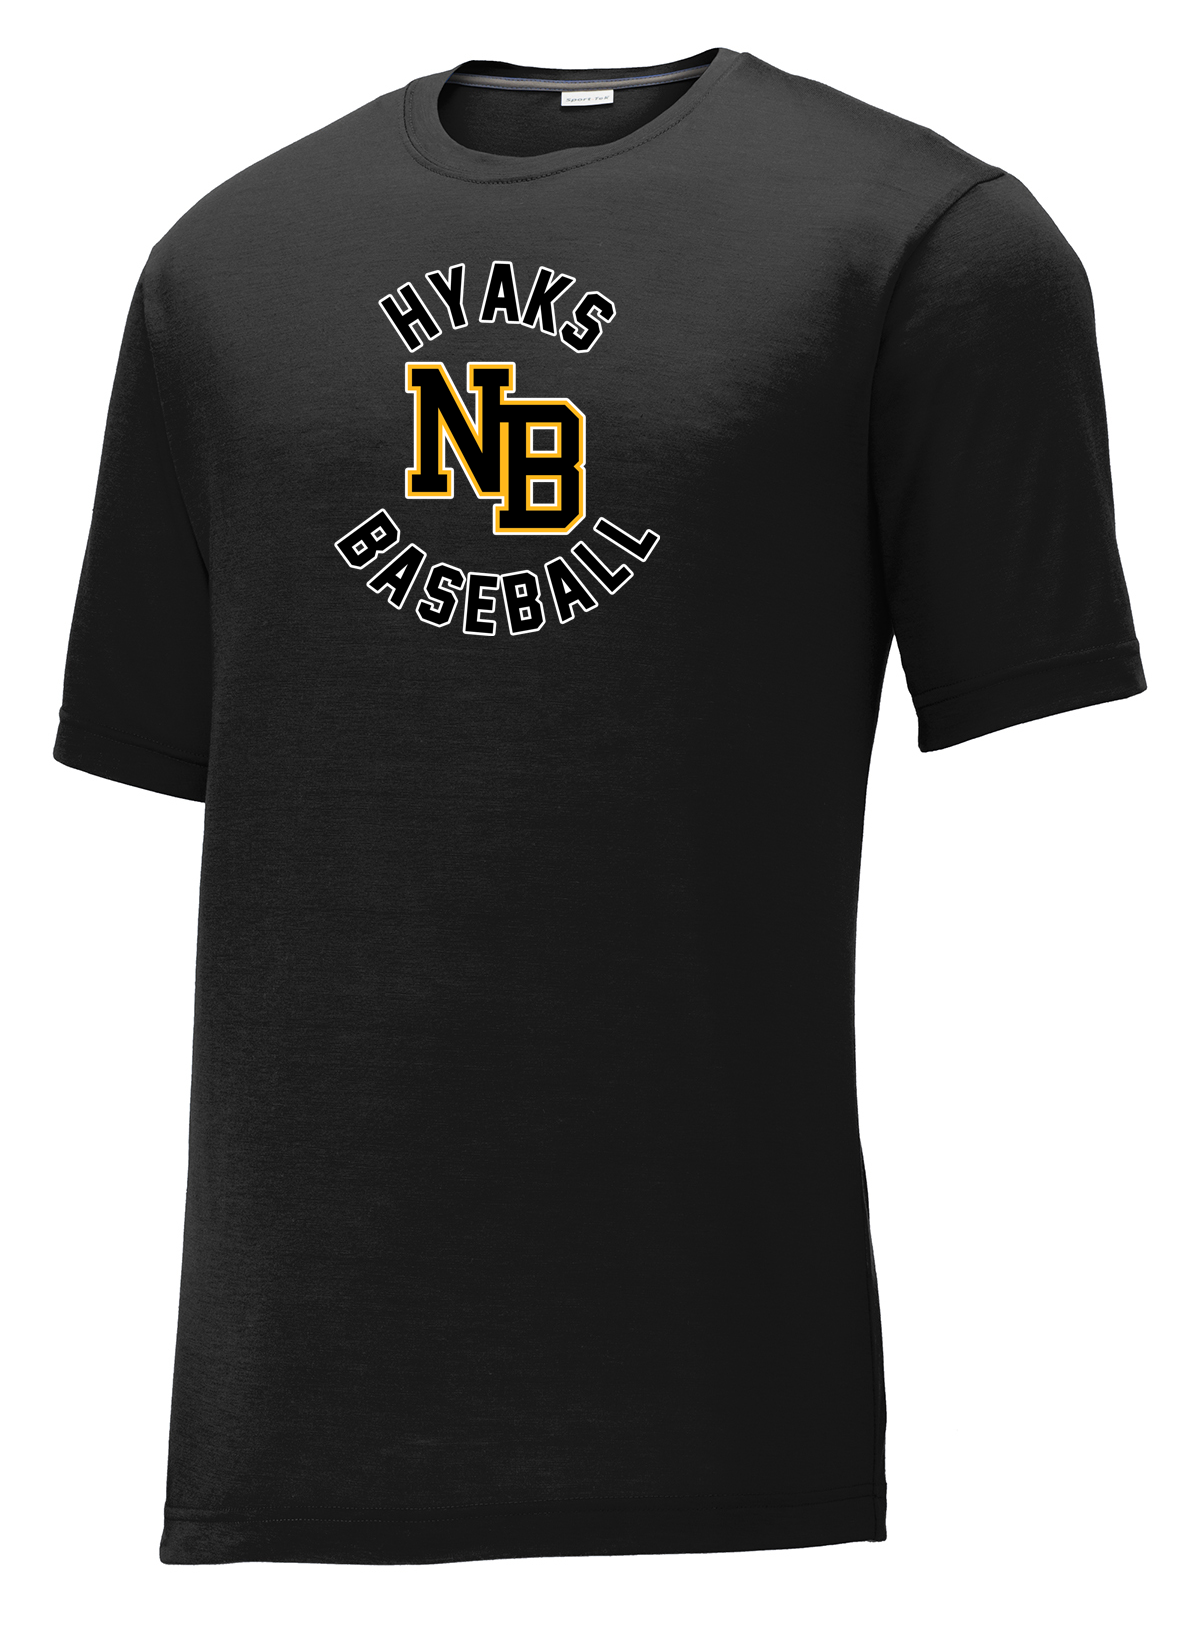 North Beach Baseball CottonTouch Performance T-Shirt